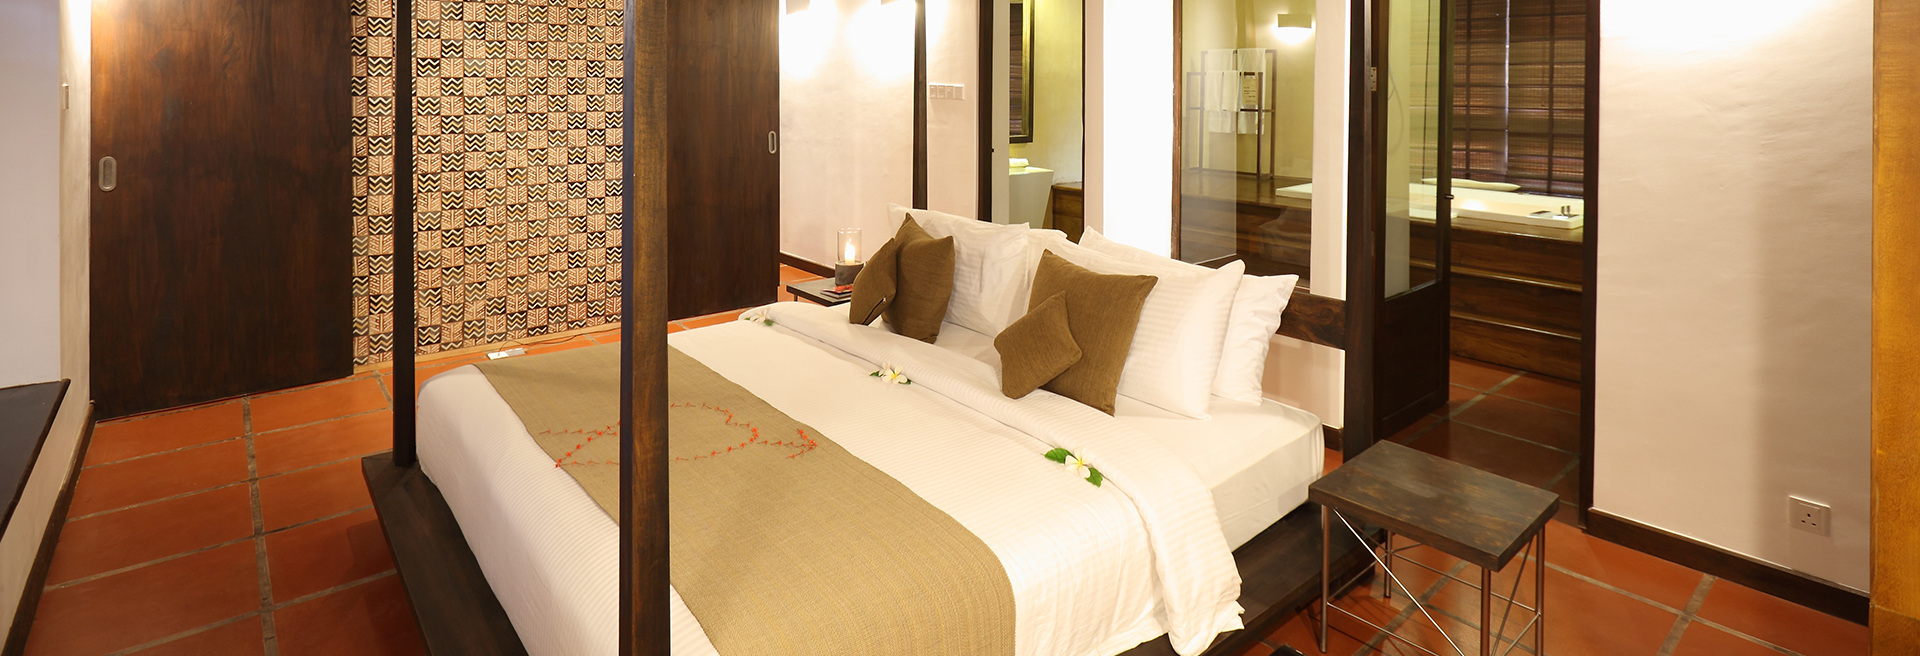 Splendid Suites Room With Scenic View